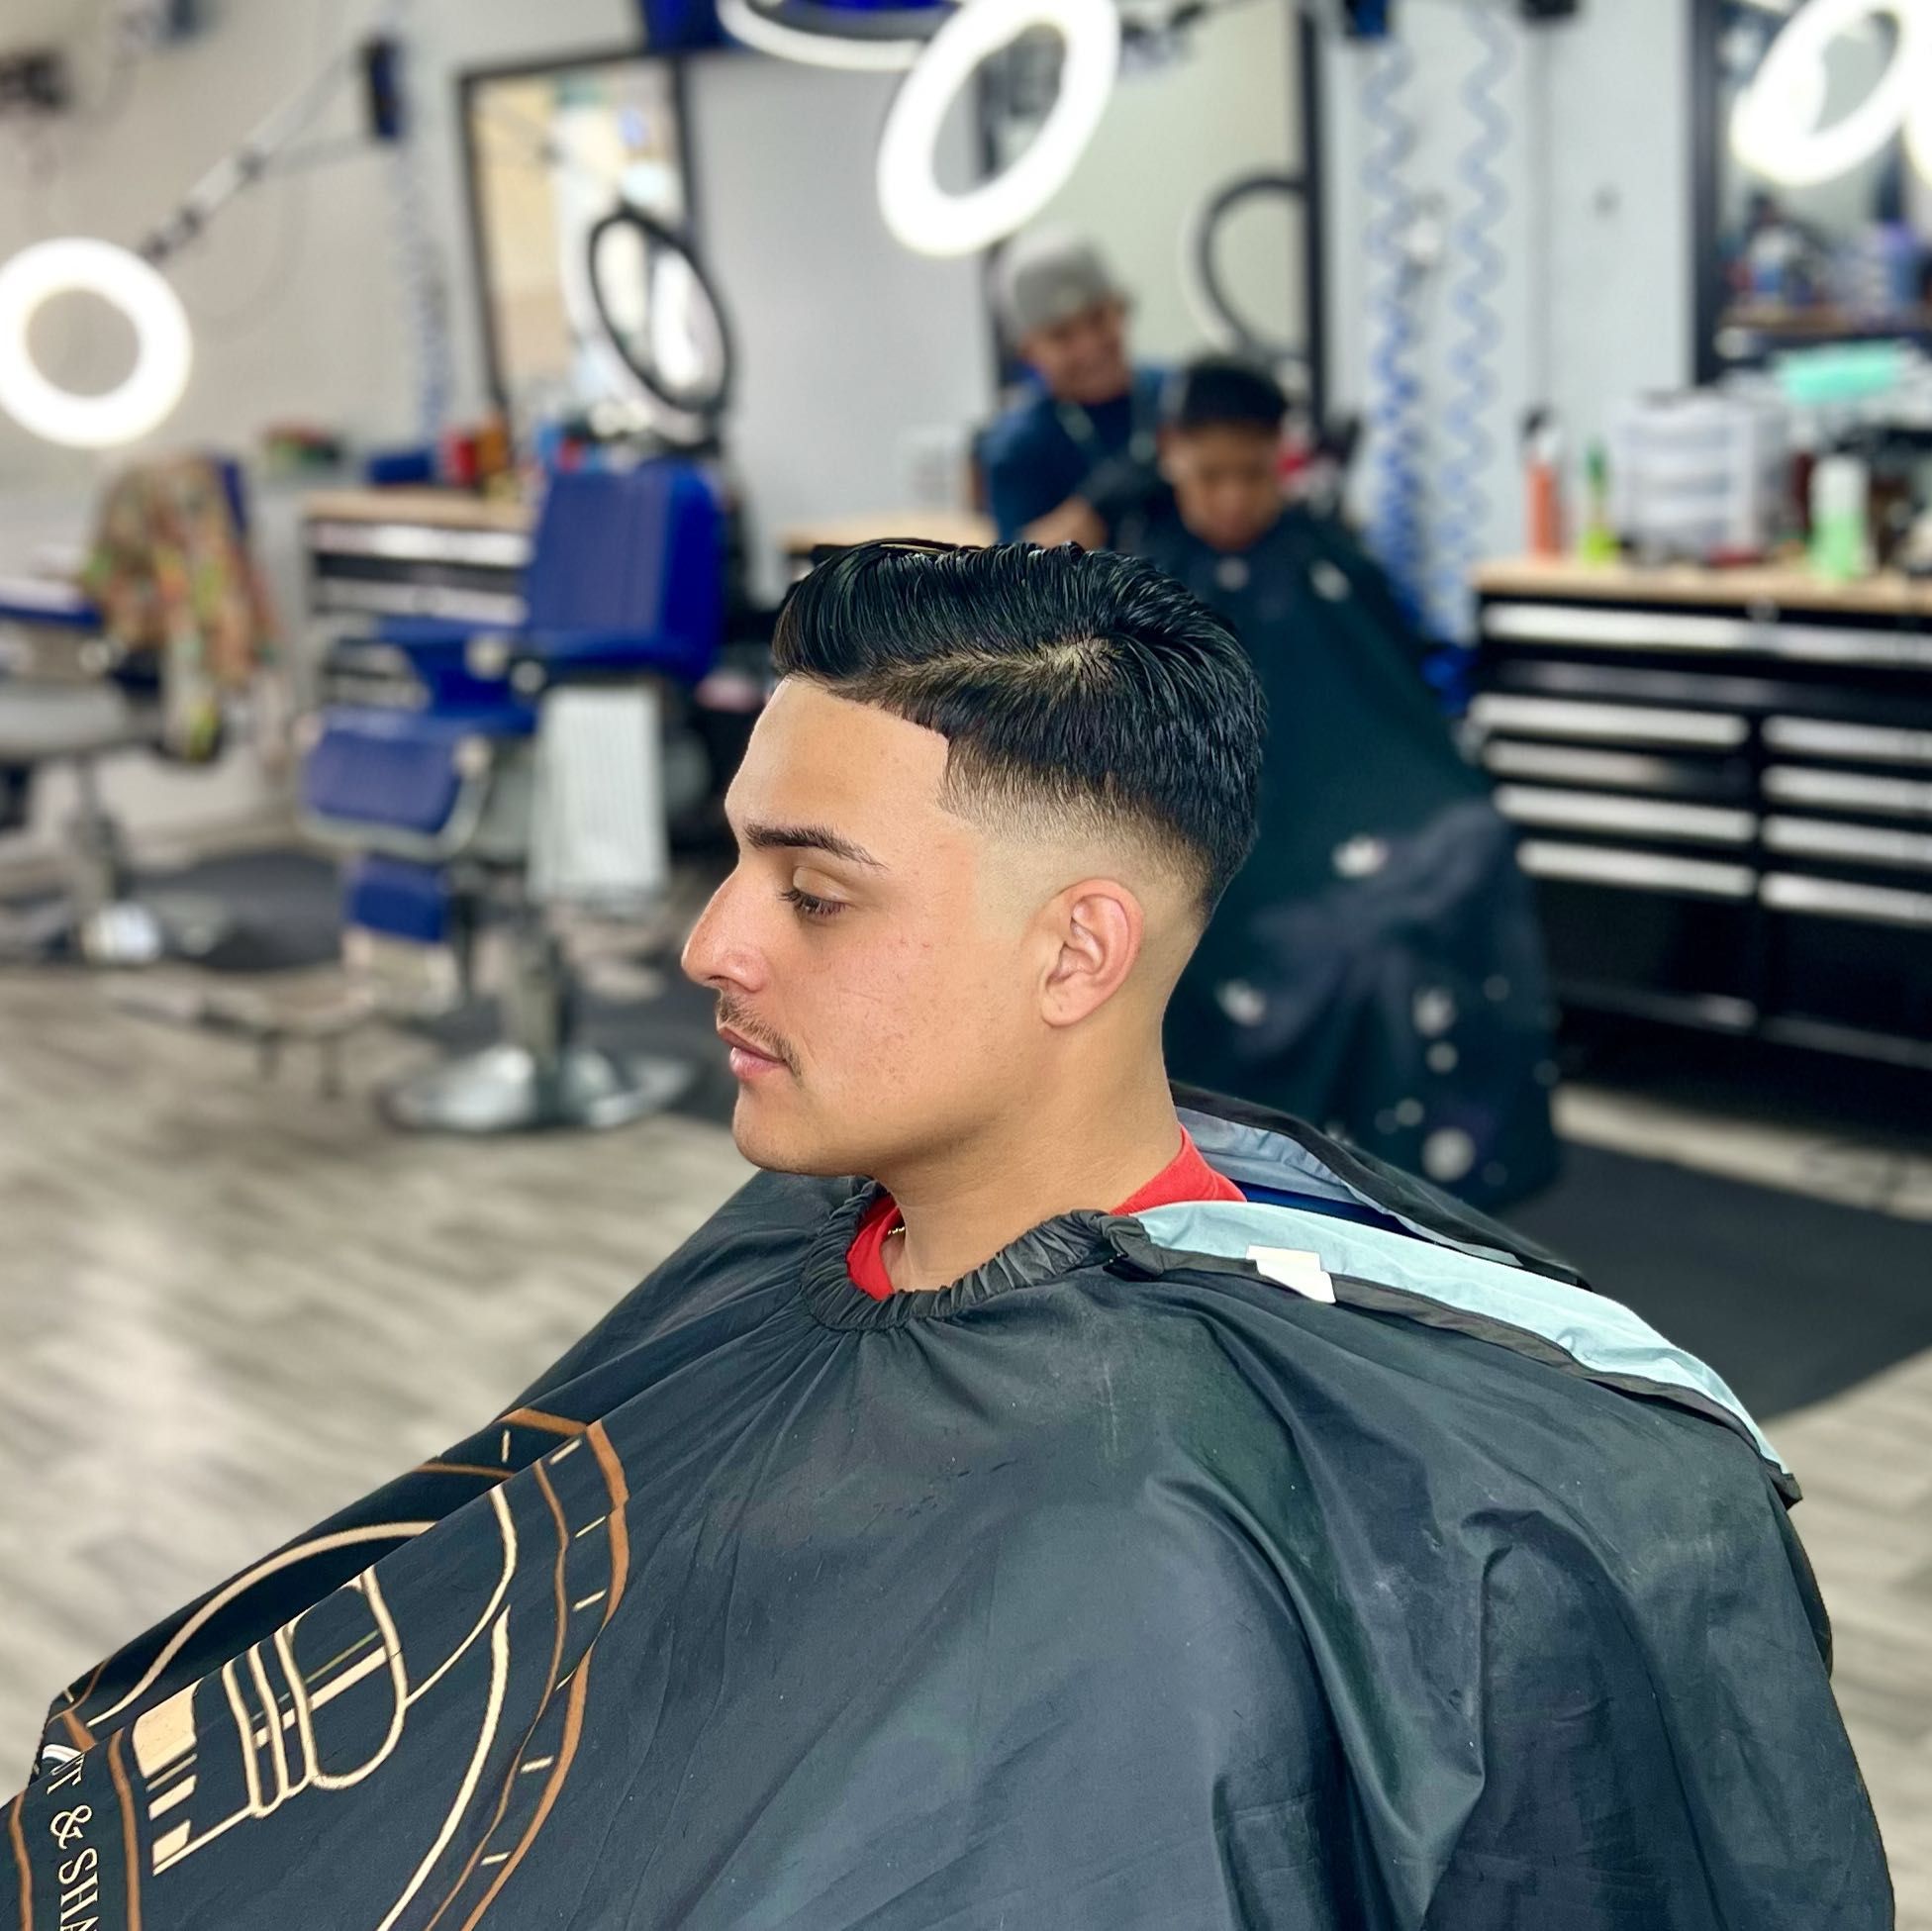 Male Haircut (18+) portfolio